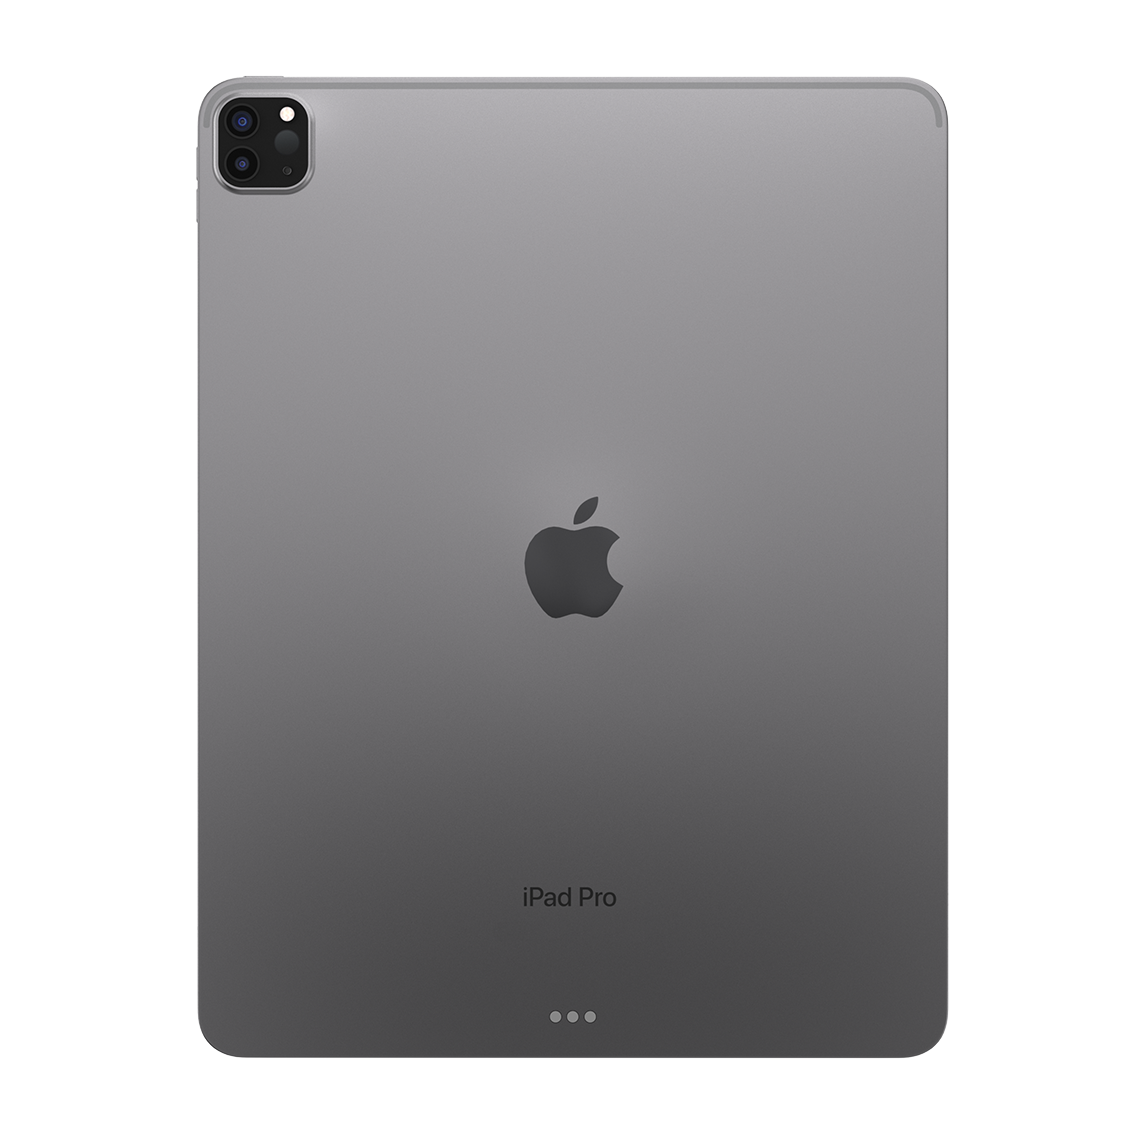 Apple iPad Pro 11-inch 4th Generation - Space Gray - 256GB, Wi-Fi + Cellular, Open Box